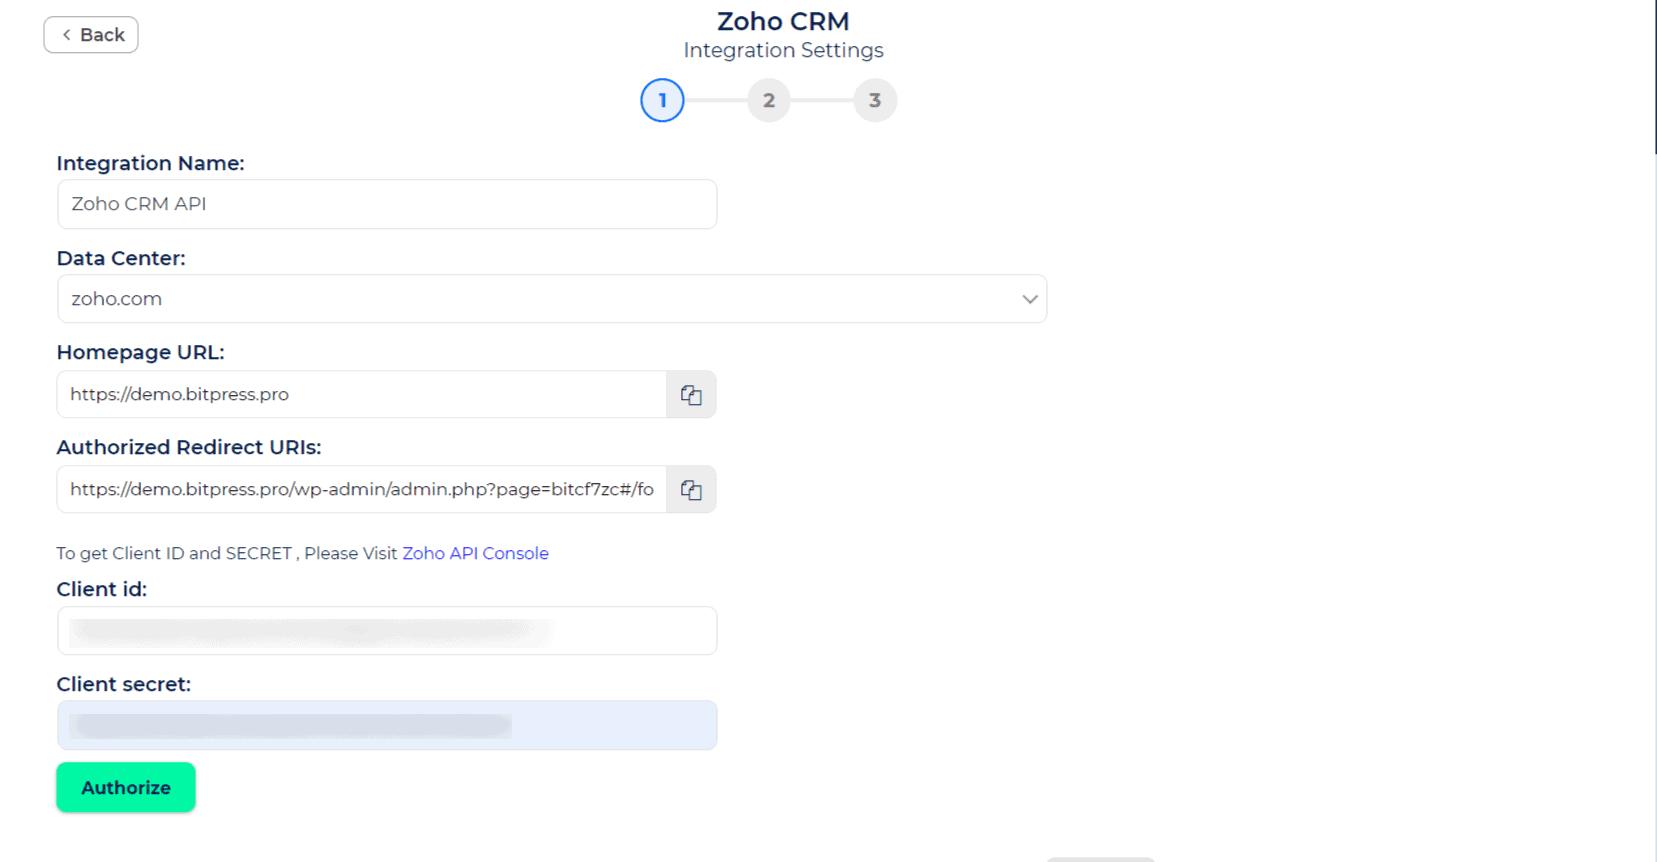 Zoho CRM Authorization process